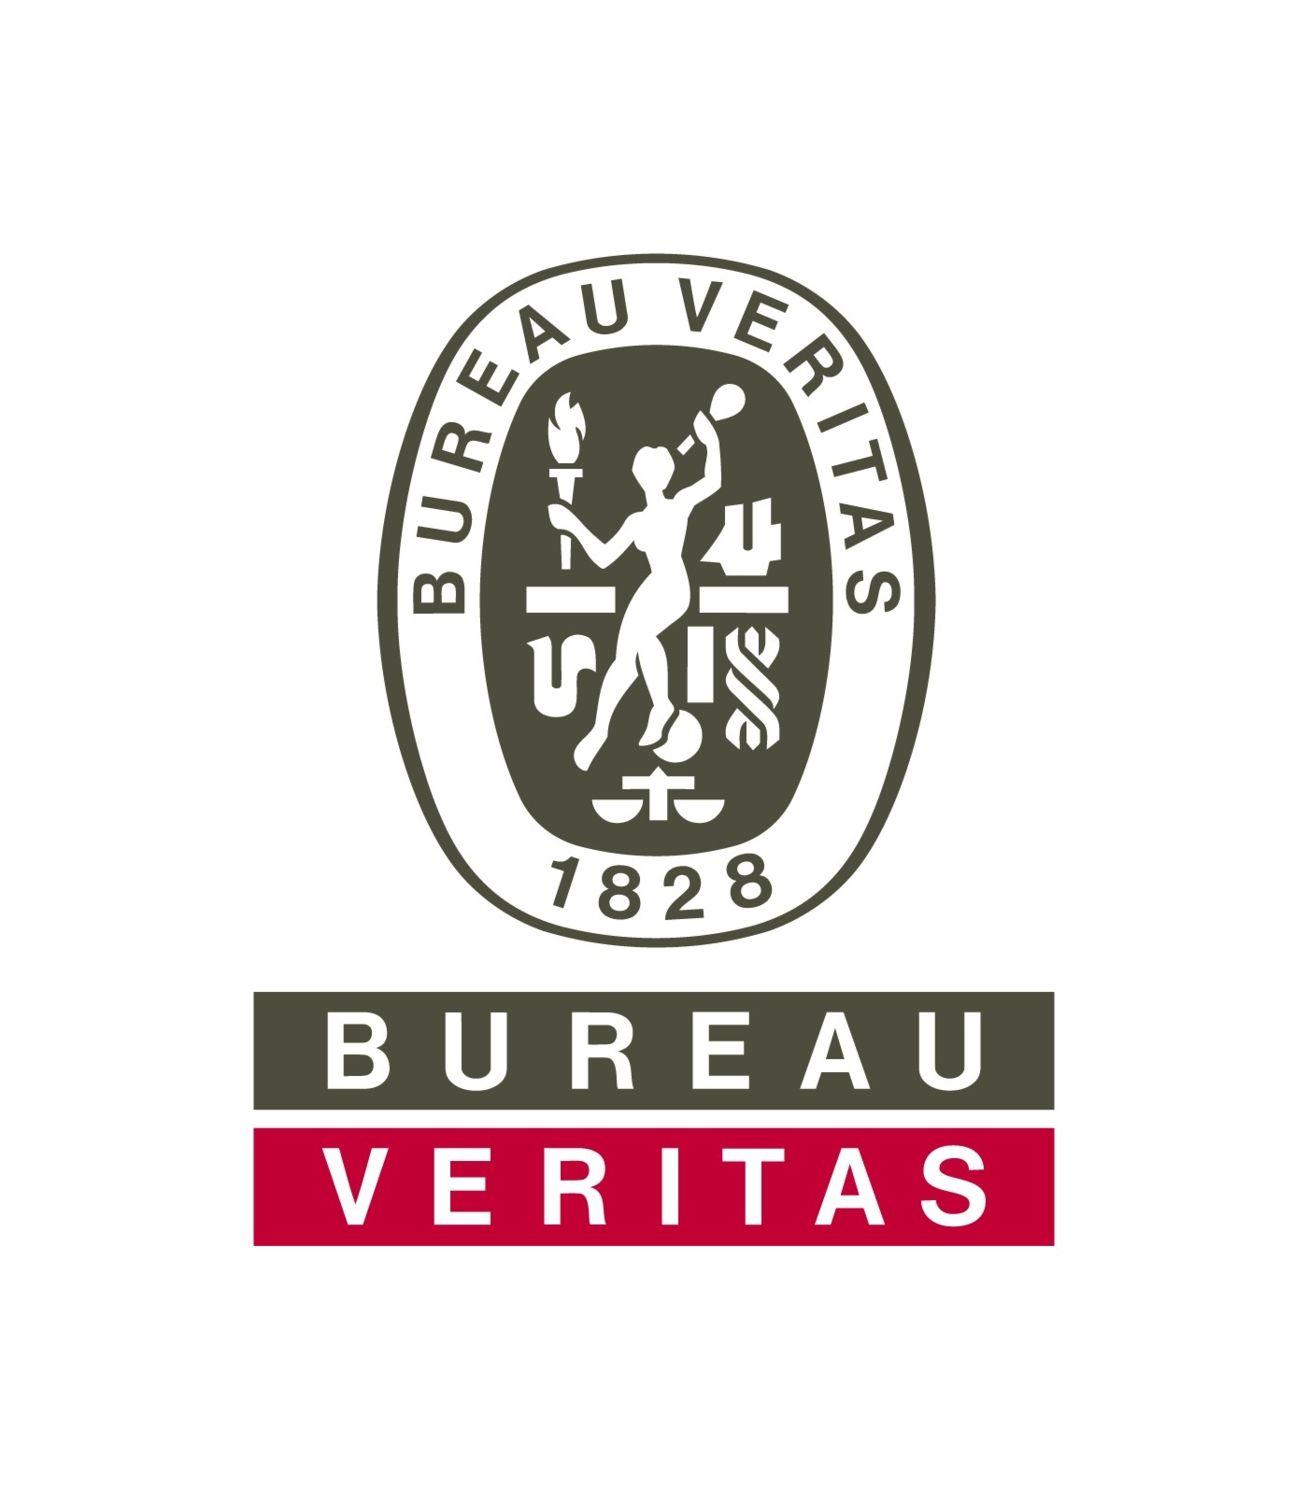 Ve RI Tas Logo - Bureau Veritas - DTOceanPlus - Design tools for ocean energy systems